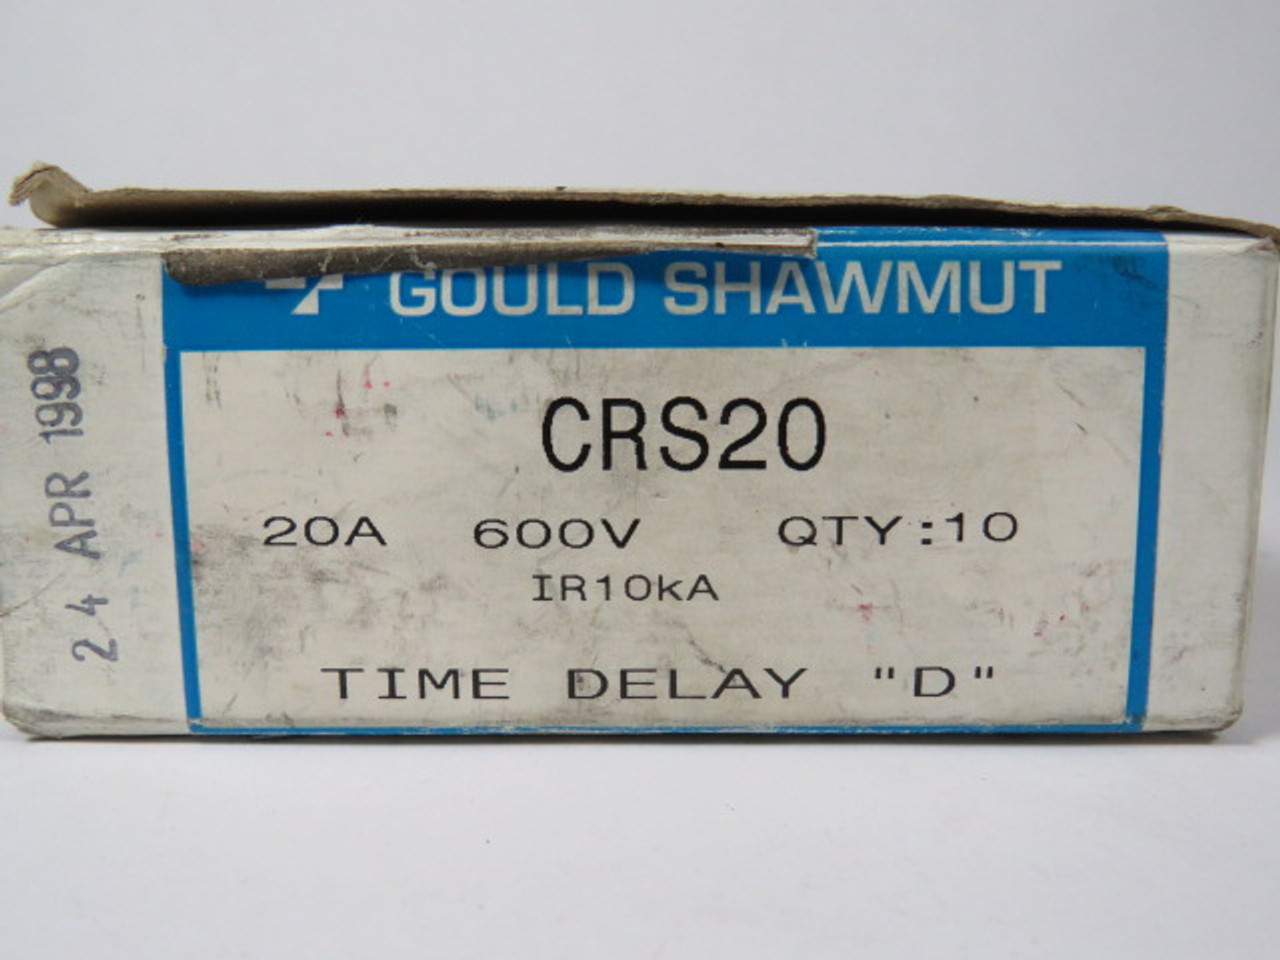 Gould Shawmut CRS20 Dual Element Fuse 20A 600V Lot of 10 USED